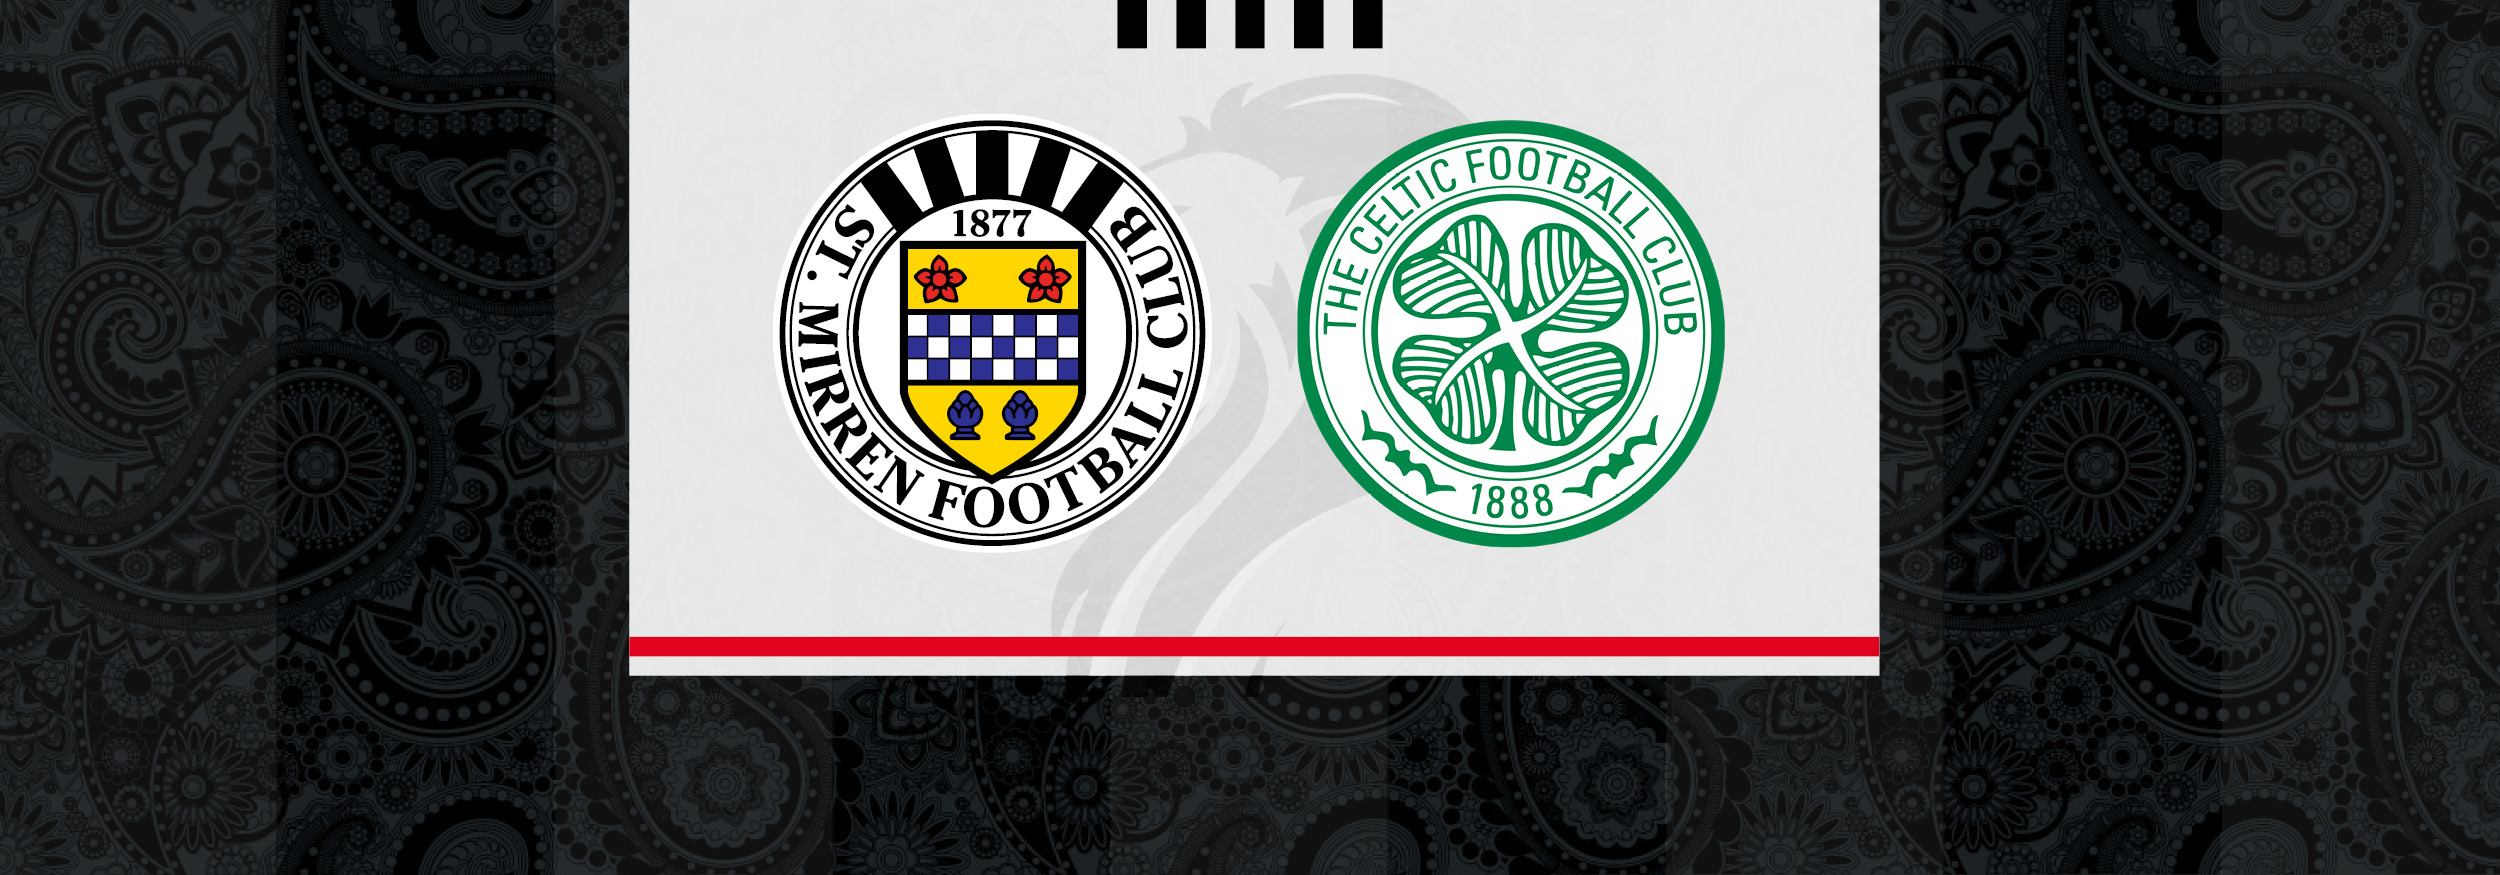 Ticket Info: St Mirren v Celtic (18th Sep)